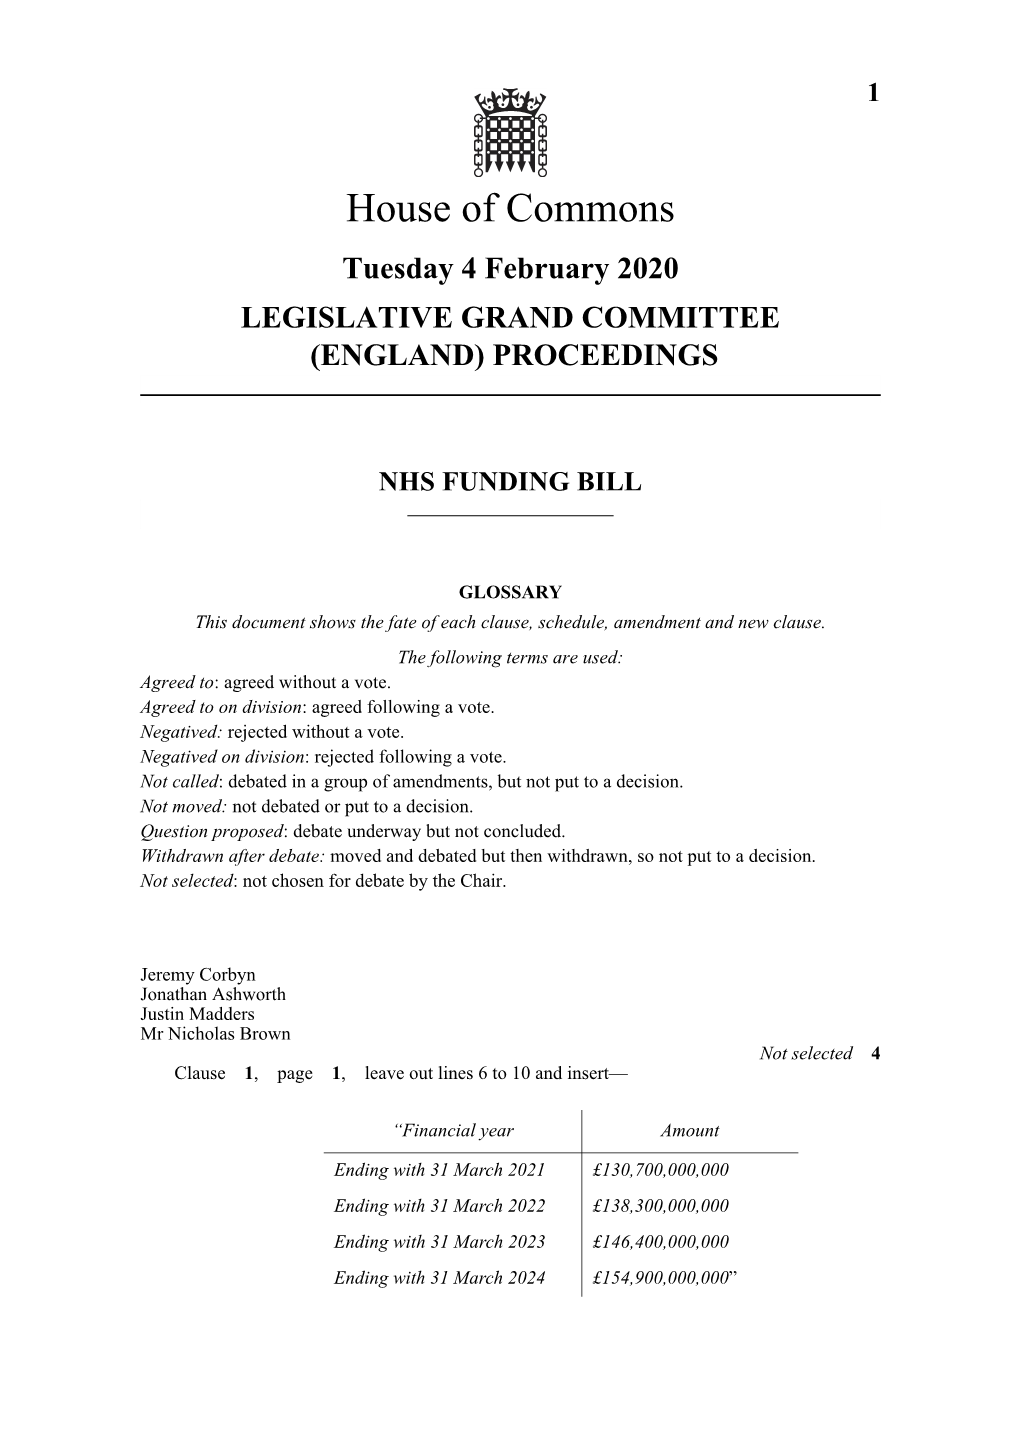 Legislative Grand Committee (England) Proceedings